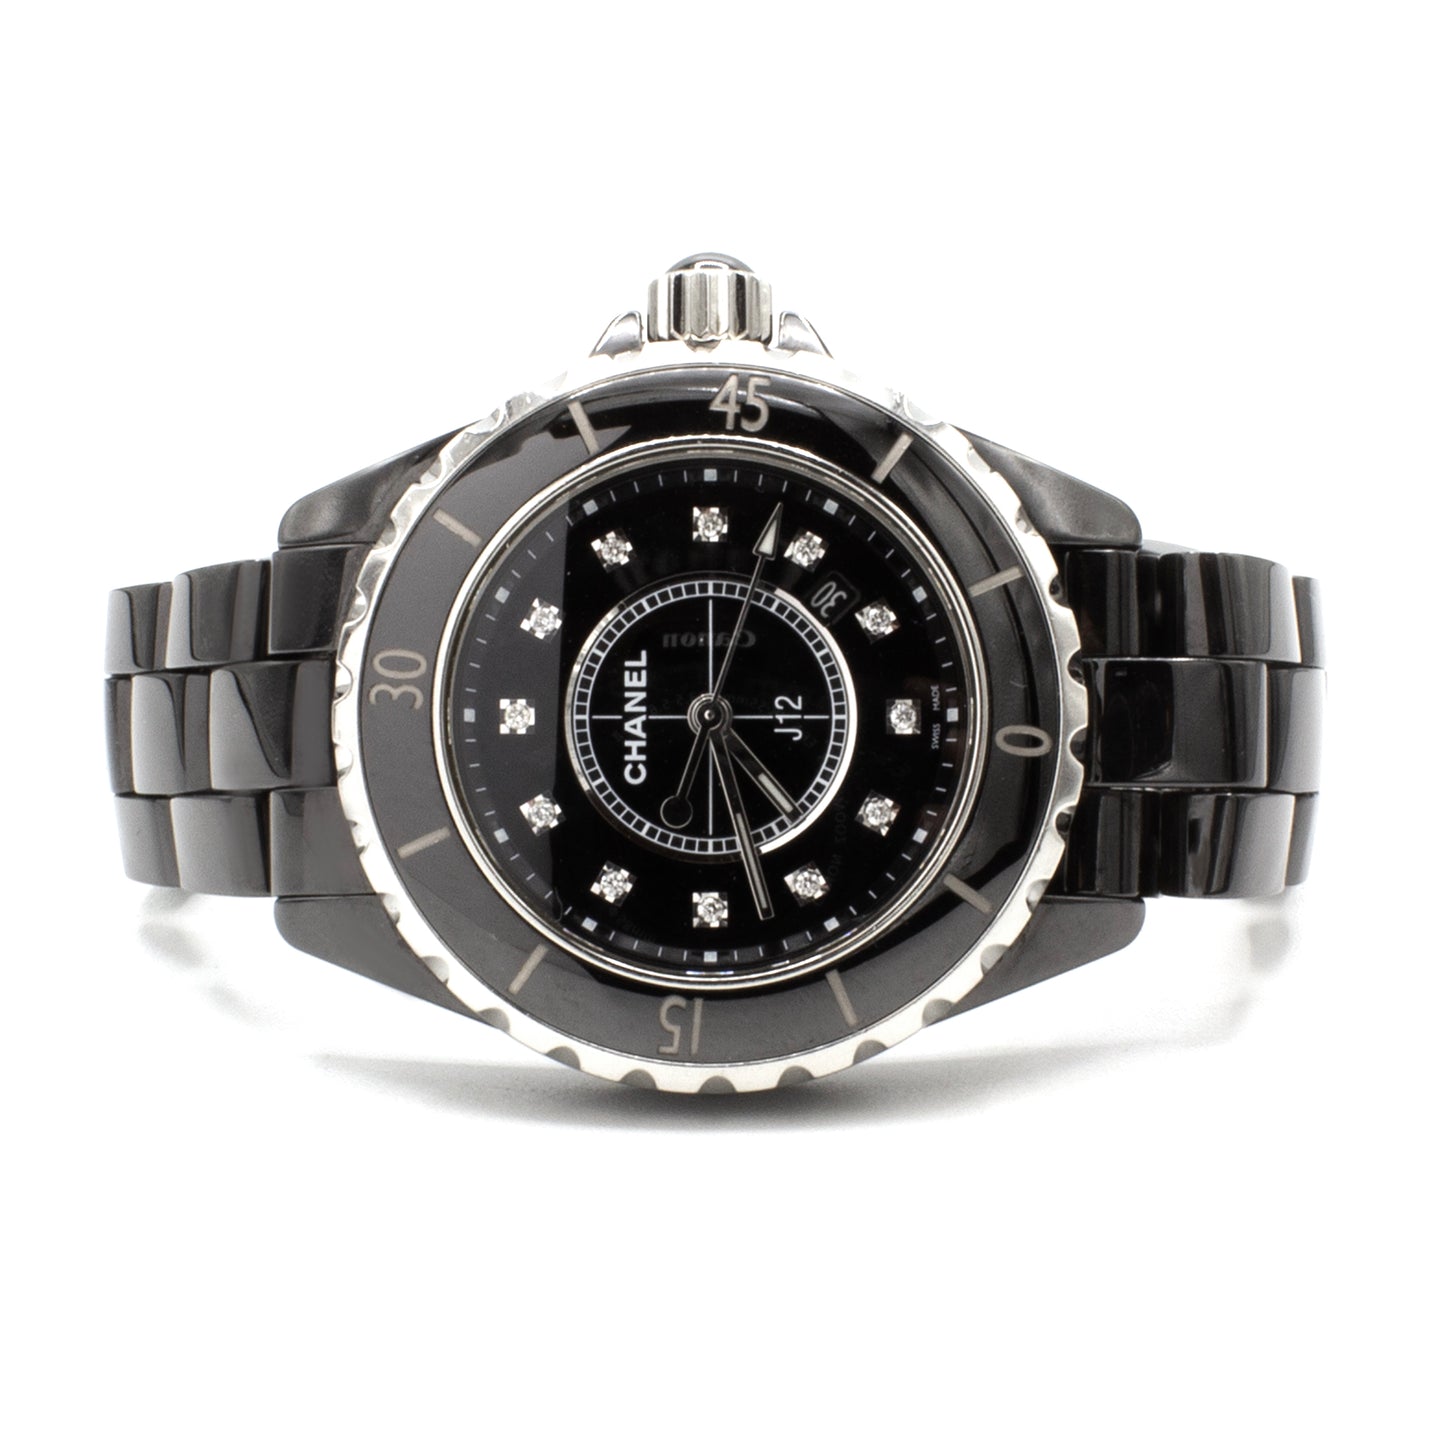 Chanel J12 black ceramic watch